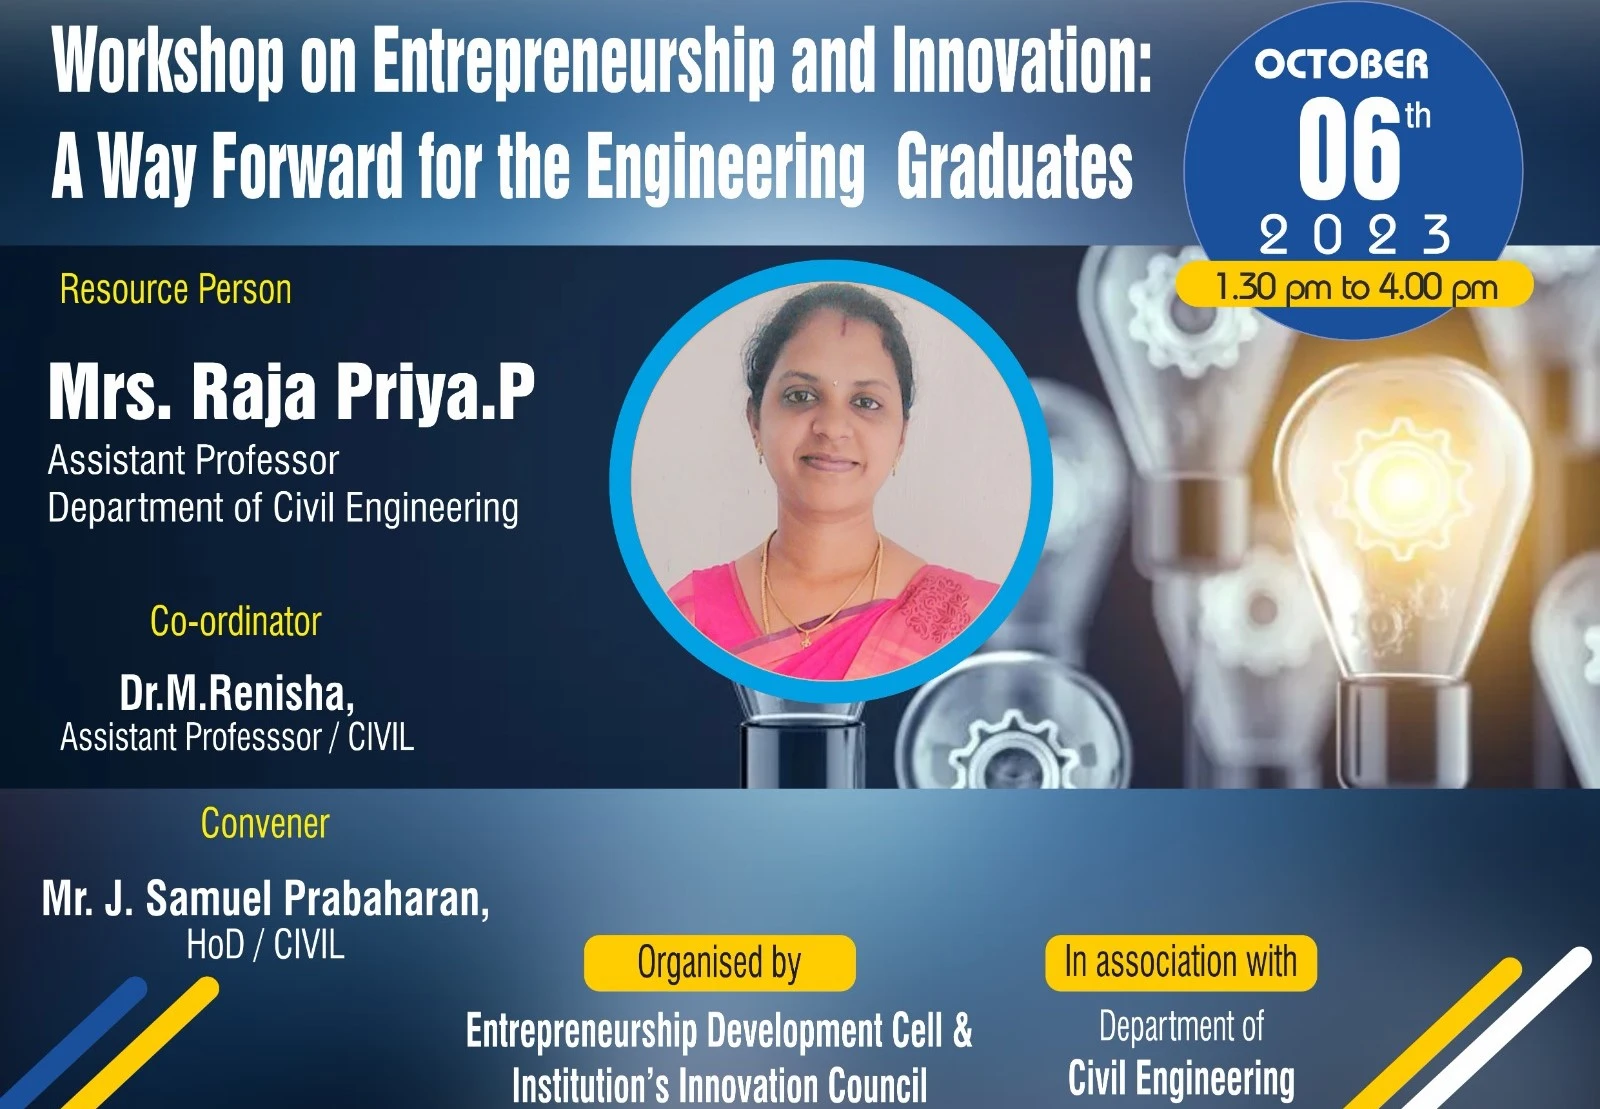 Entrepreneurship and Innovation: A Way Forward for the Engineering Graduates